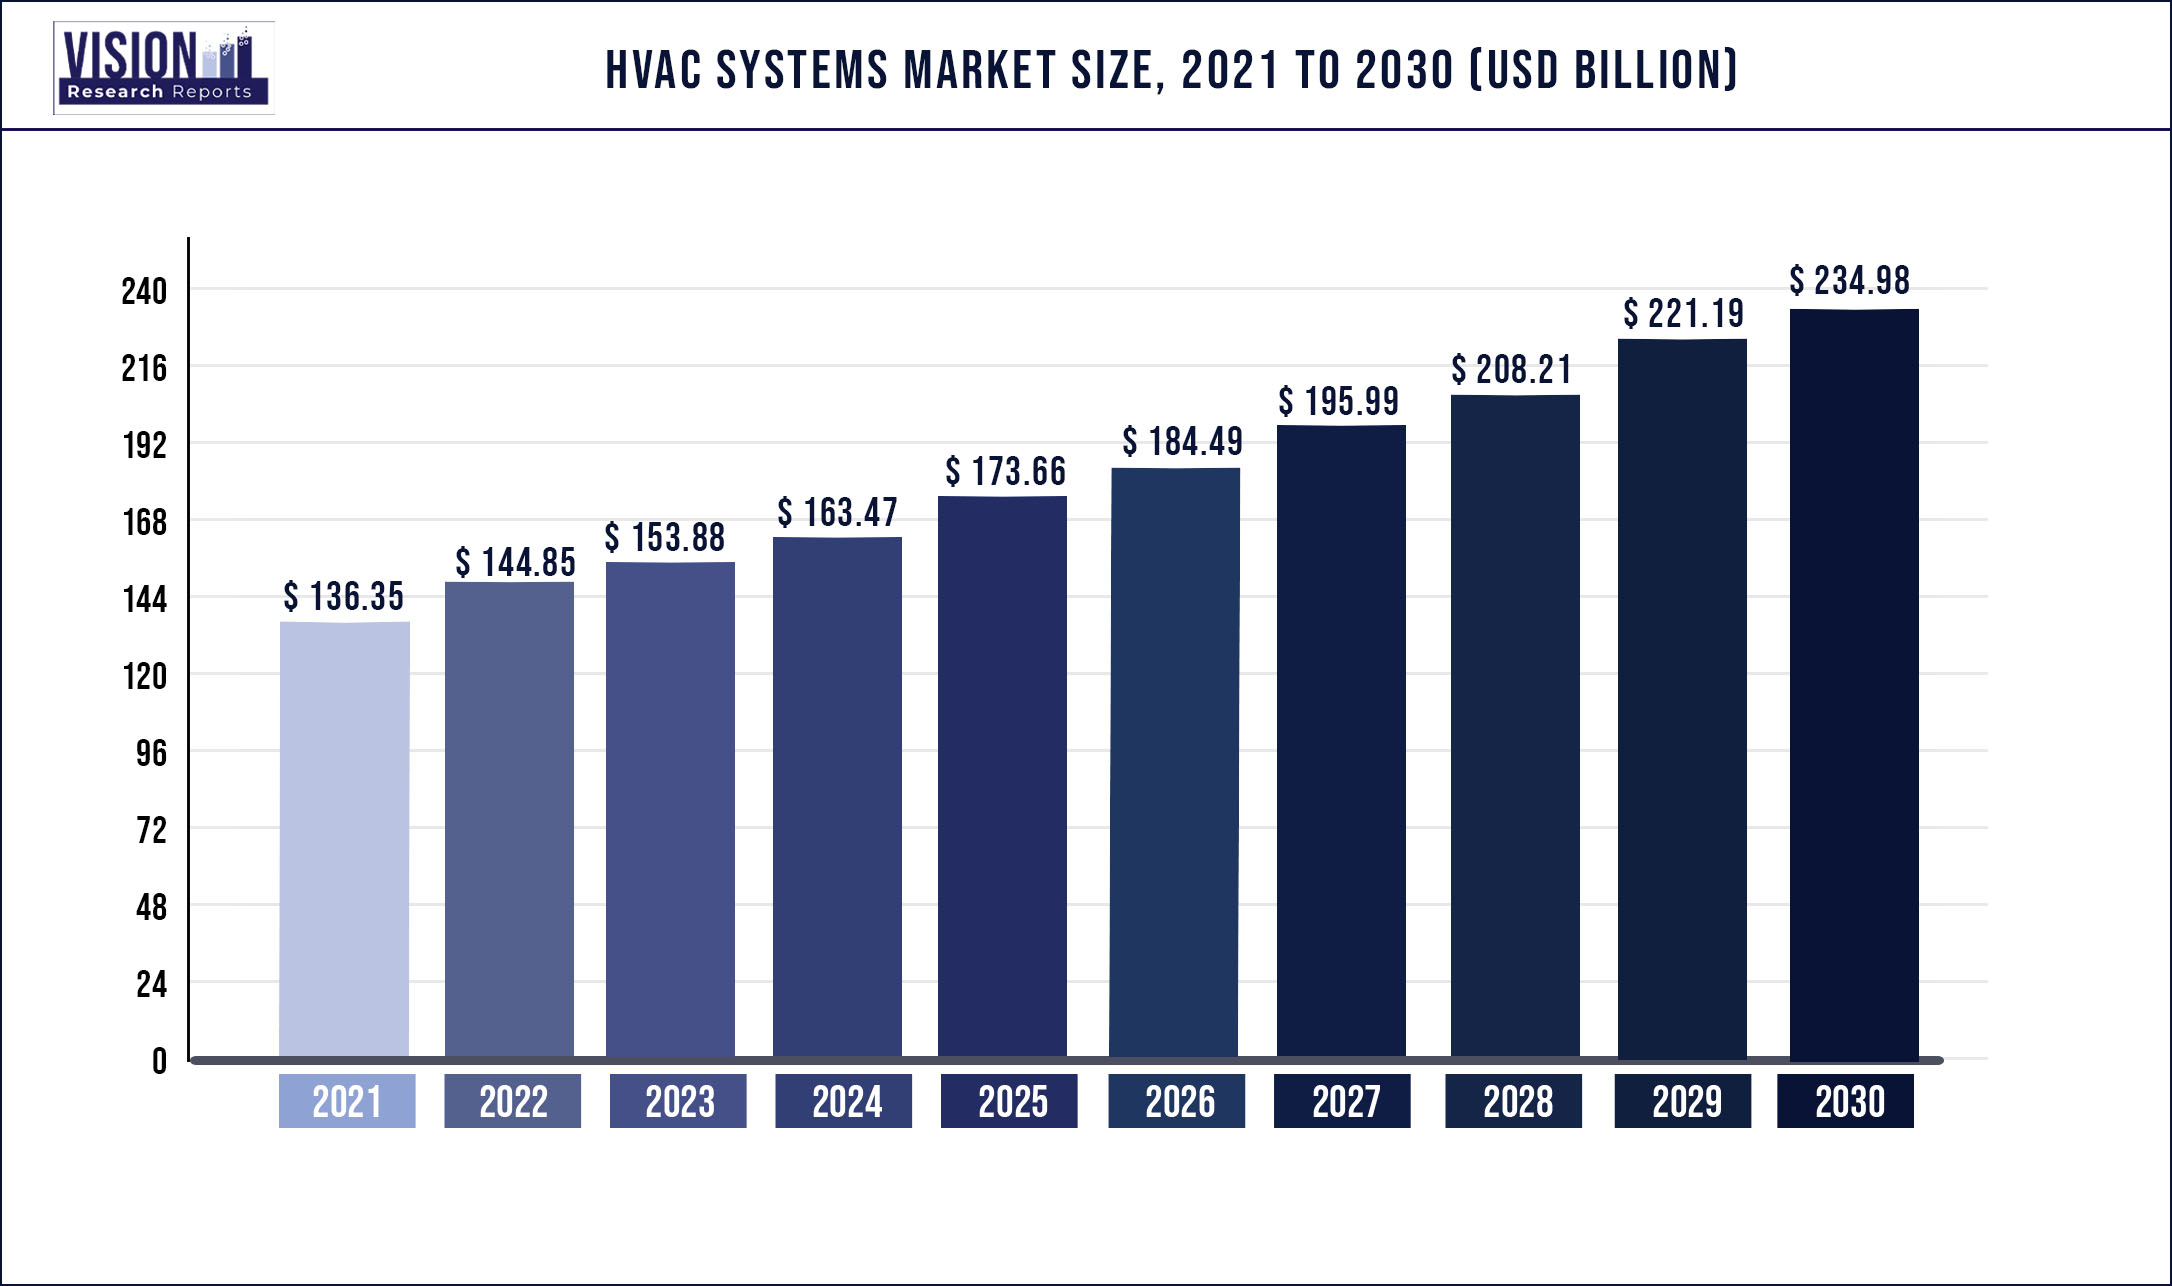 HVAC Systems Market Size 2021 to 2030